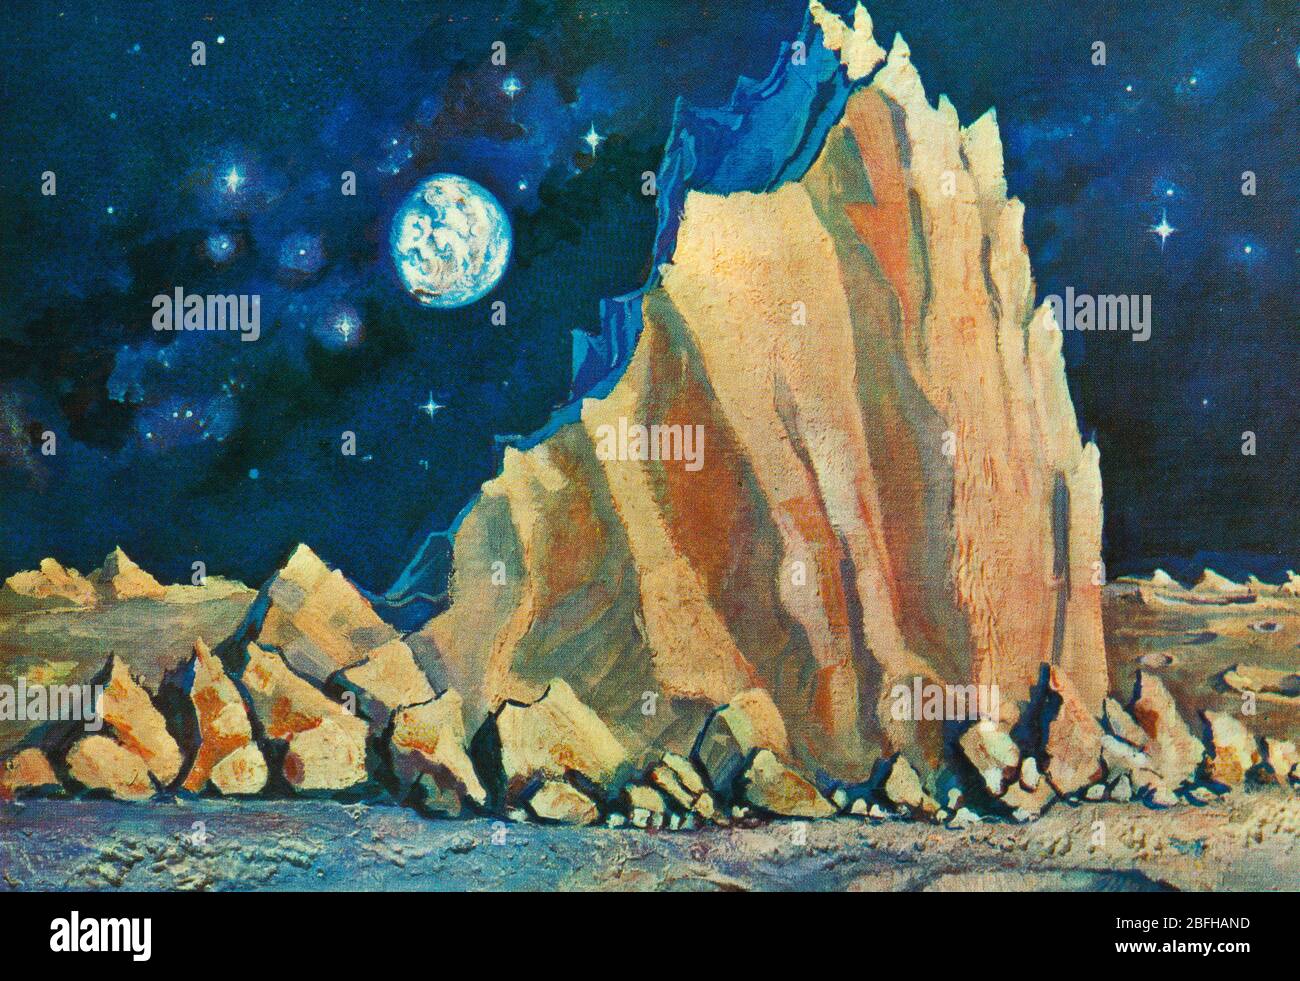 Exploración espacial, arte futurista de A.Leonov, de postal soviética, 1970 Foto de stock